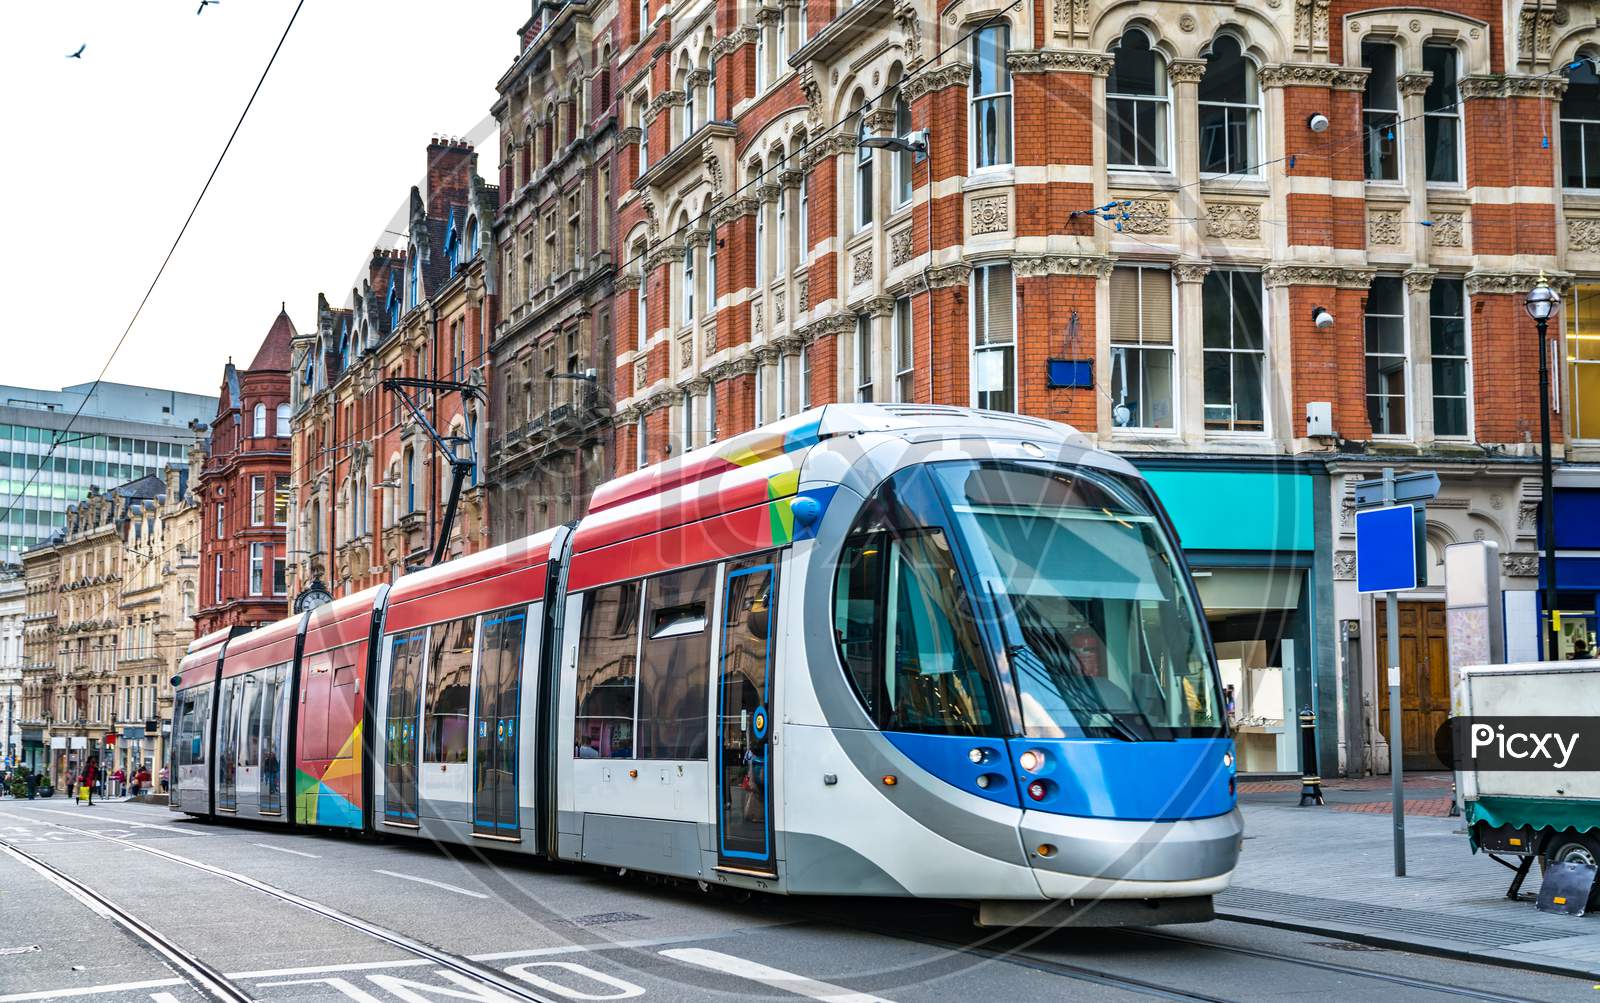 City Tram In Birmingham, England